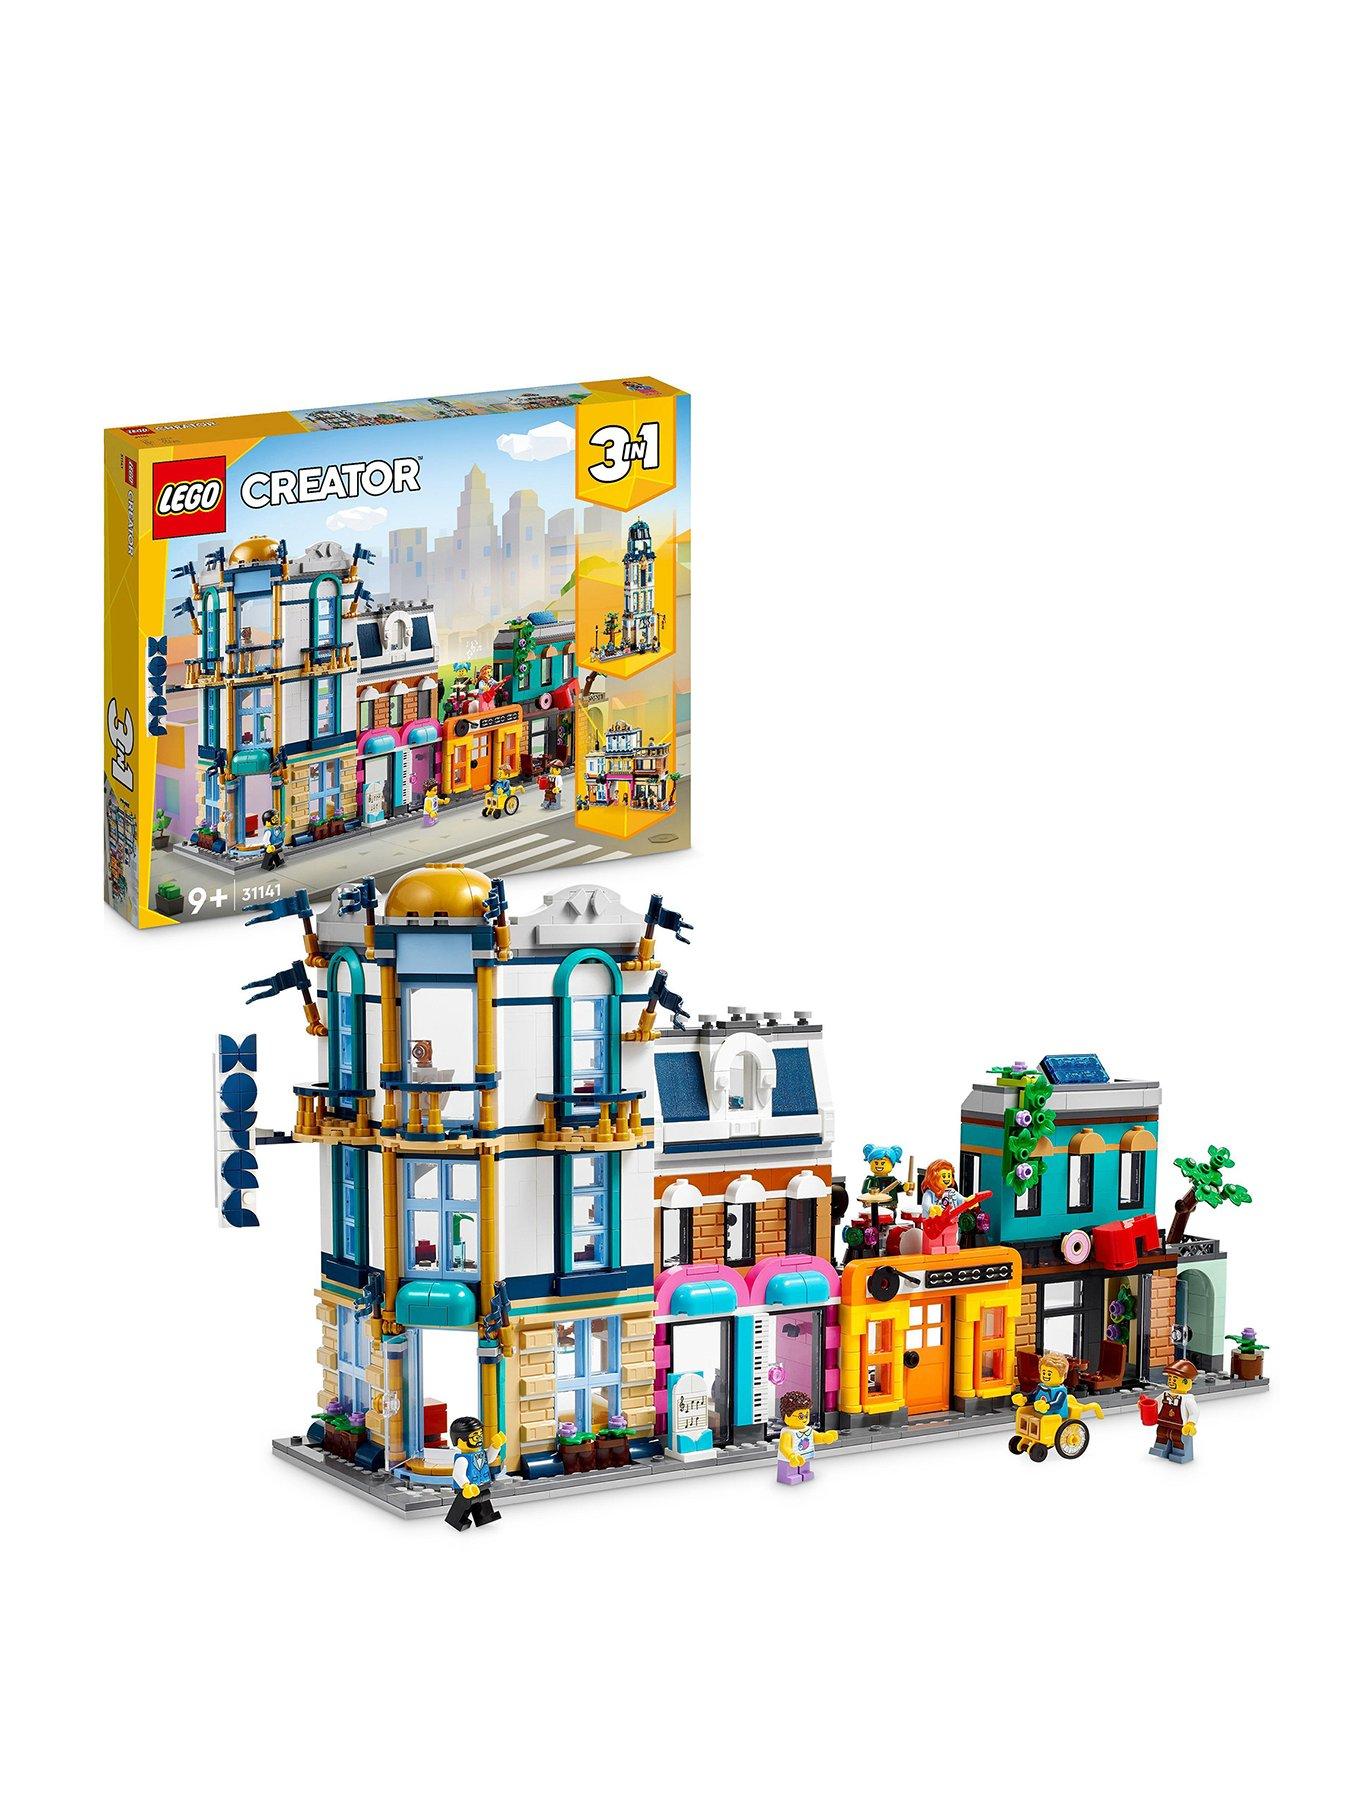 DIY Lego Shelf Tutorial - Remington Avenue